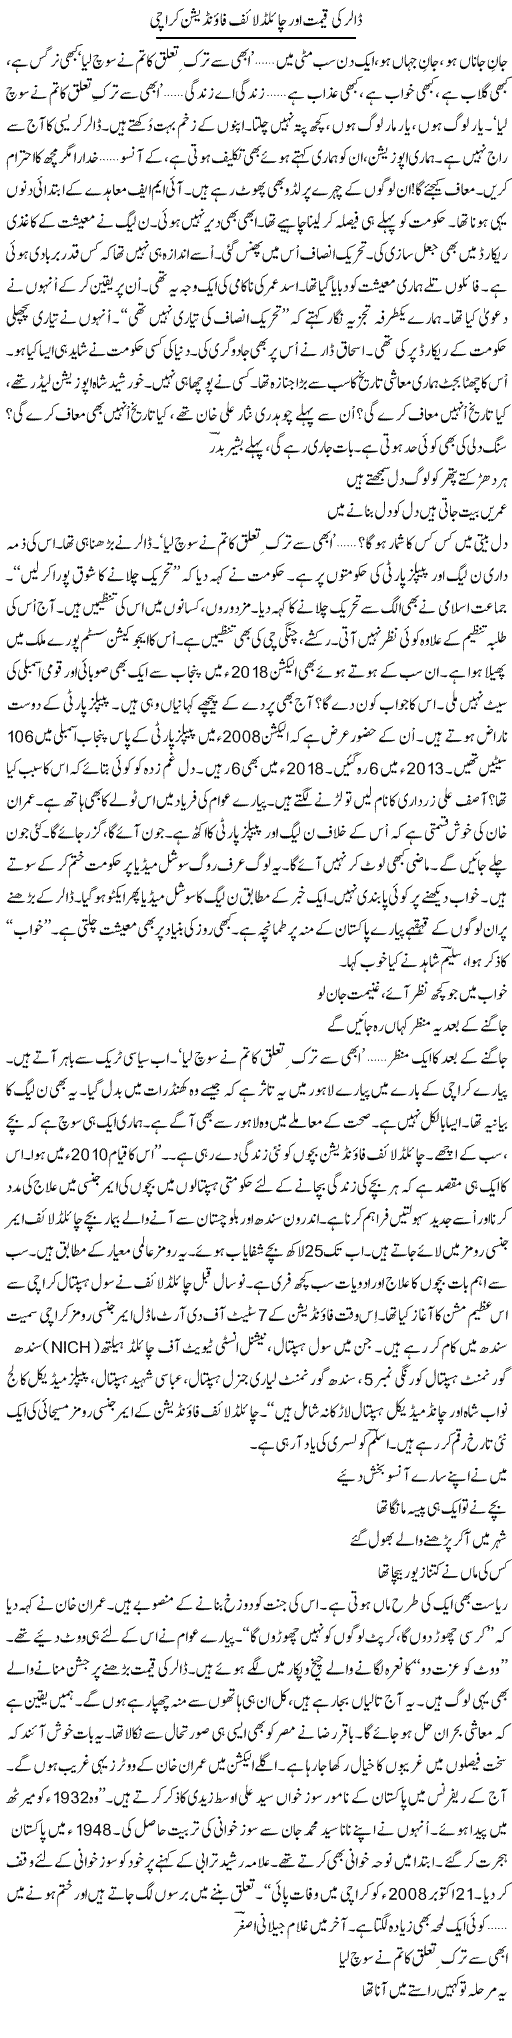 Dollar Ki Qeemat Aur Child Life Foundation Karachi | Ejaz Hafeez Khan | Daily Urdu Columns